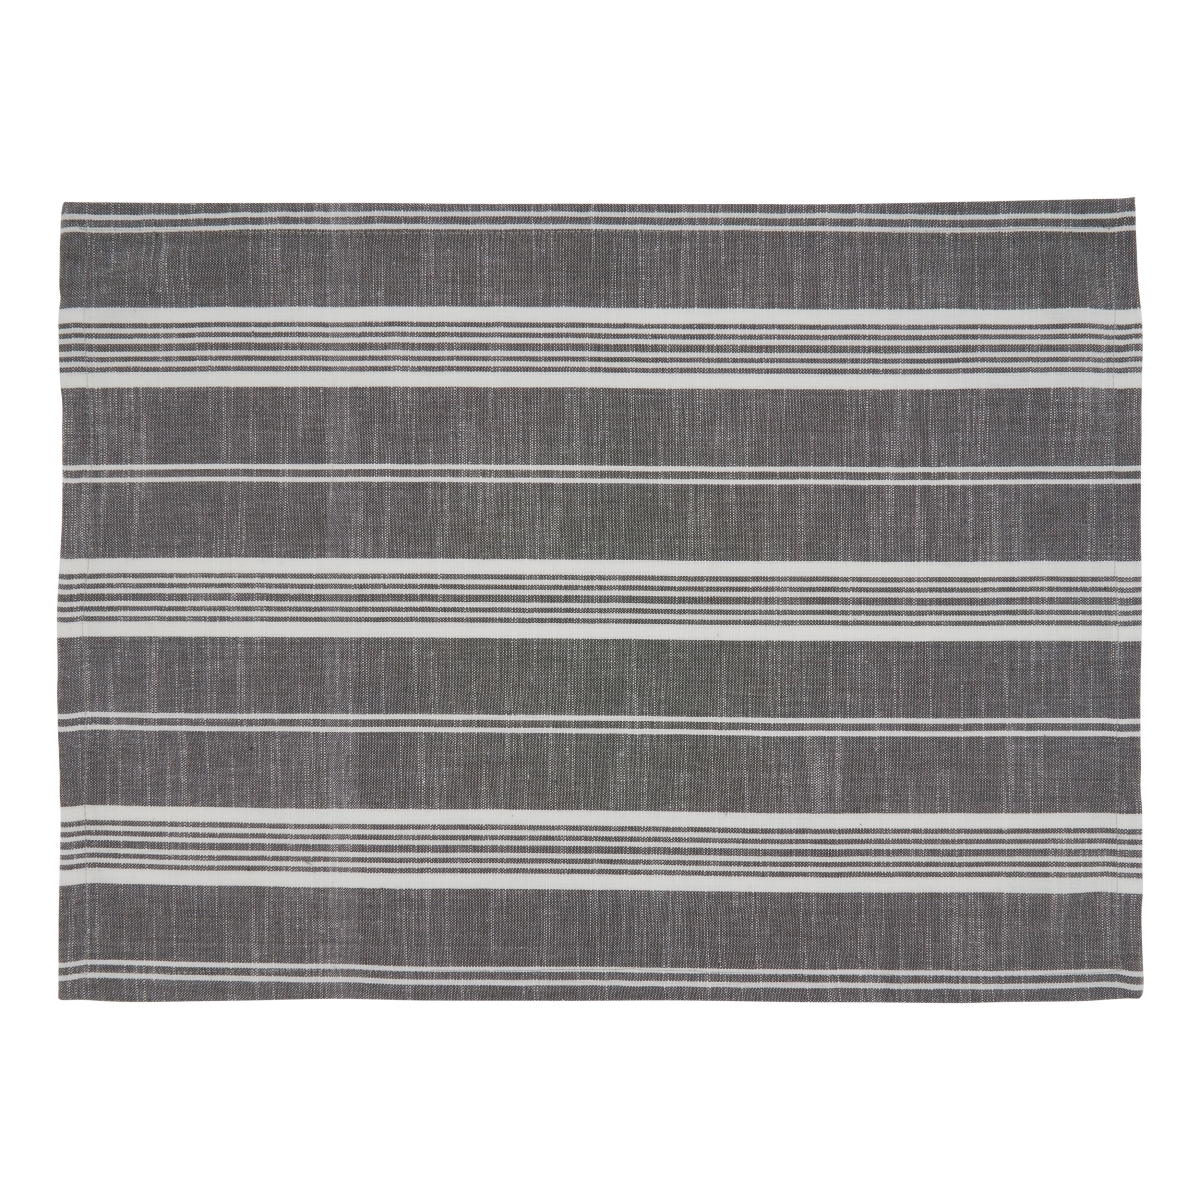 SARO LIFESTYLE SARO 5618.GY1420B 14 x 20 in. Oblong Striped Design Cotton Placemats  Grey - Set of 4